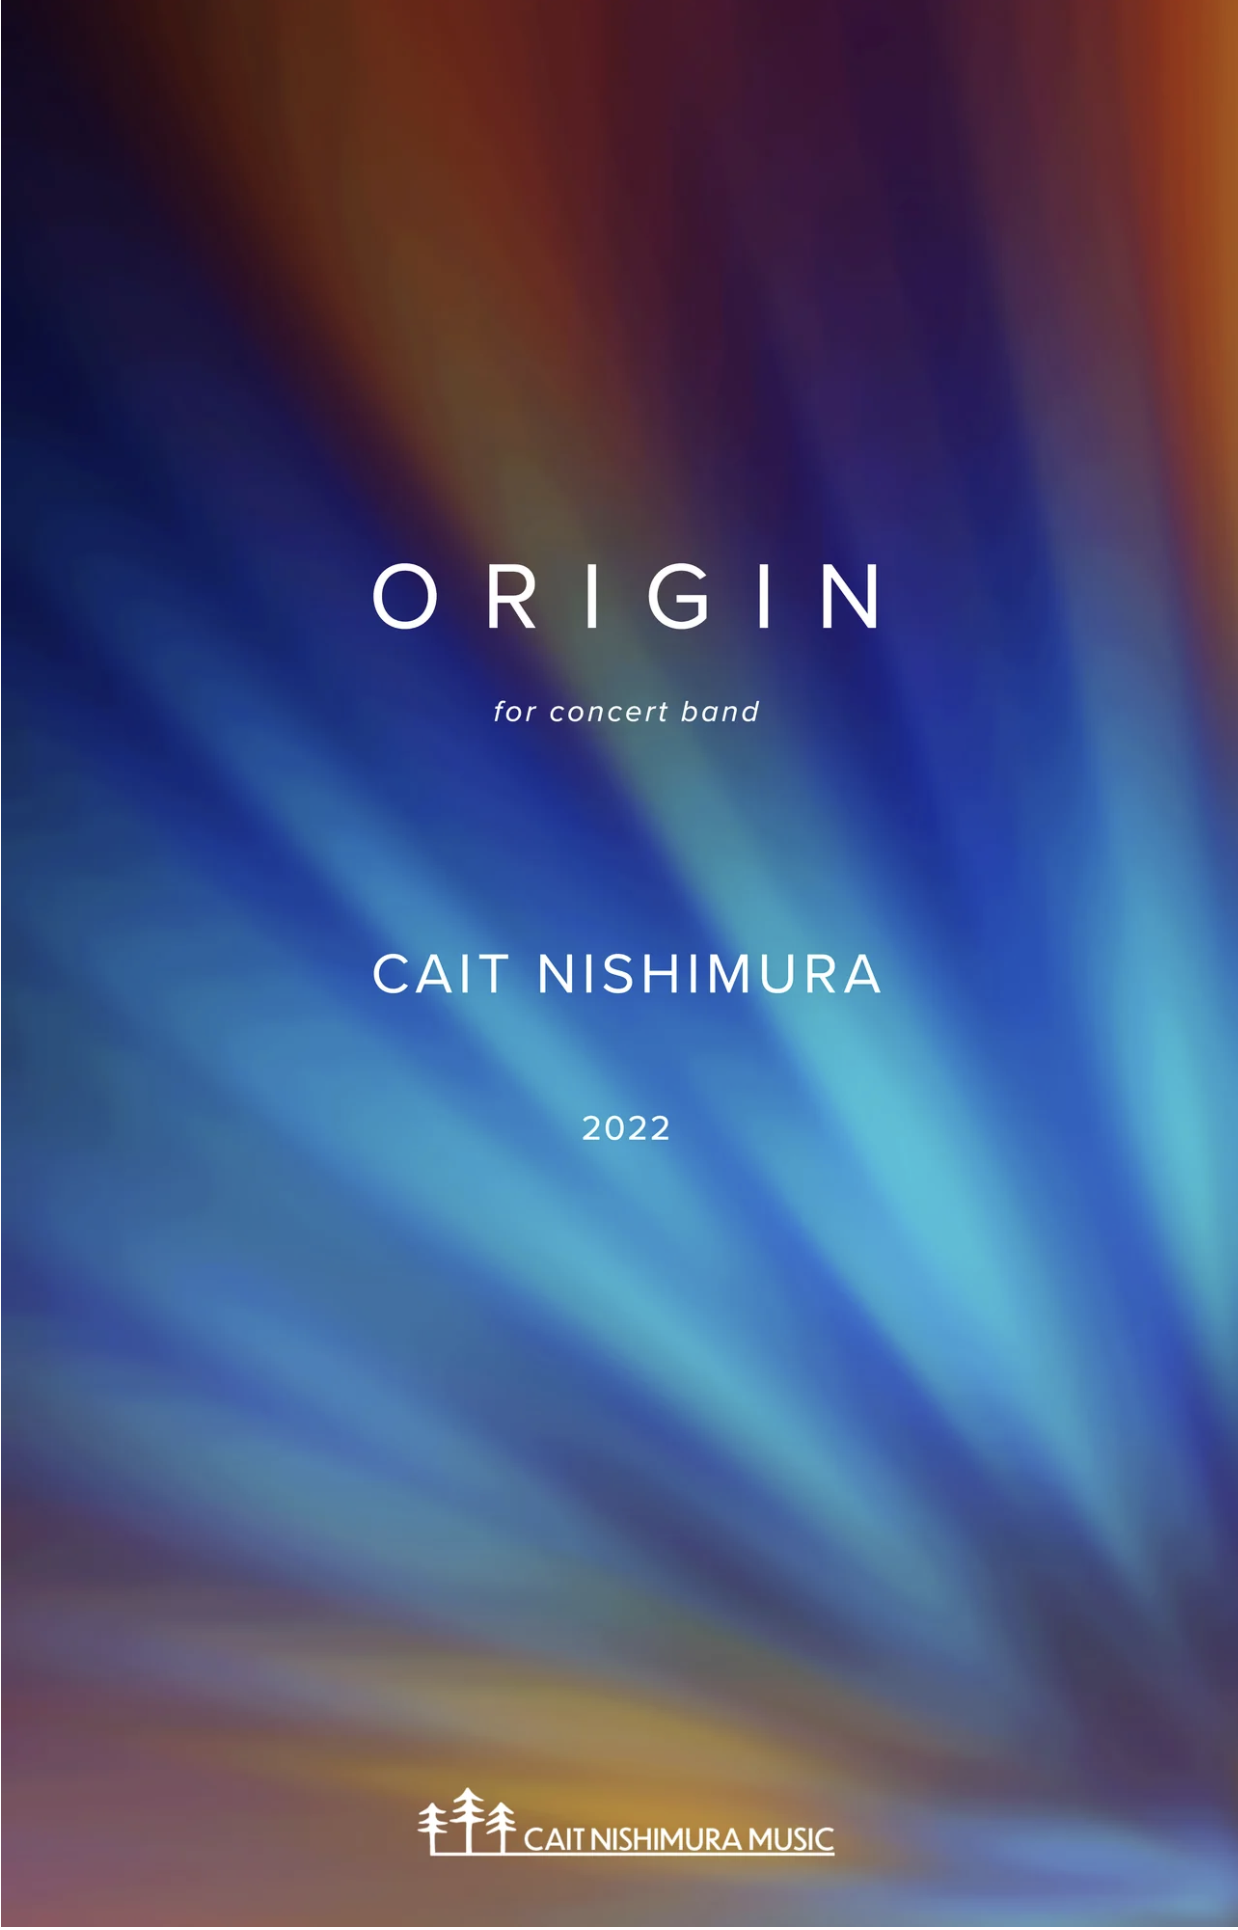 Origin by Cait Nishimura